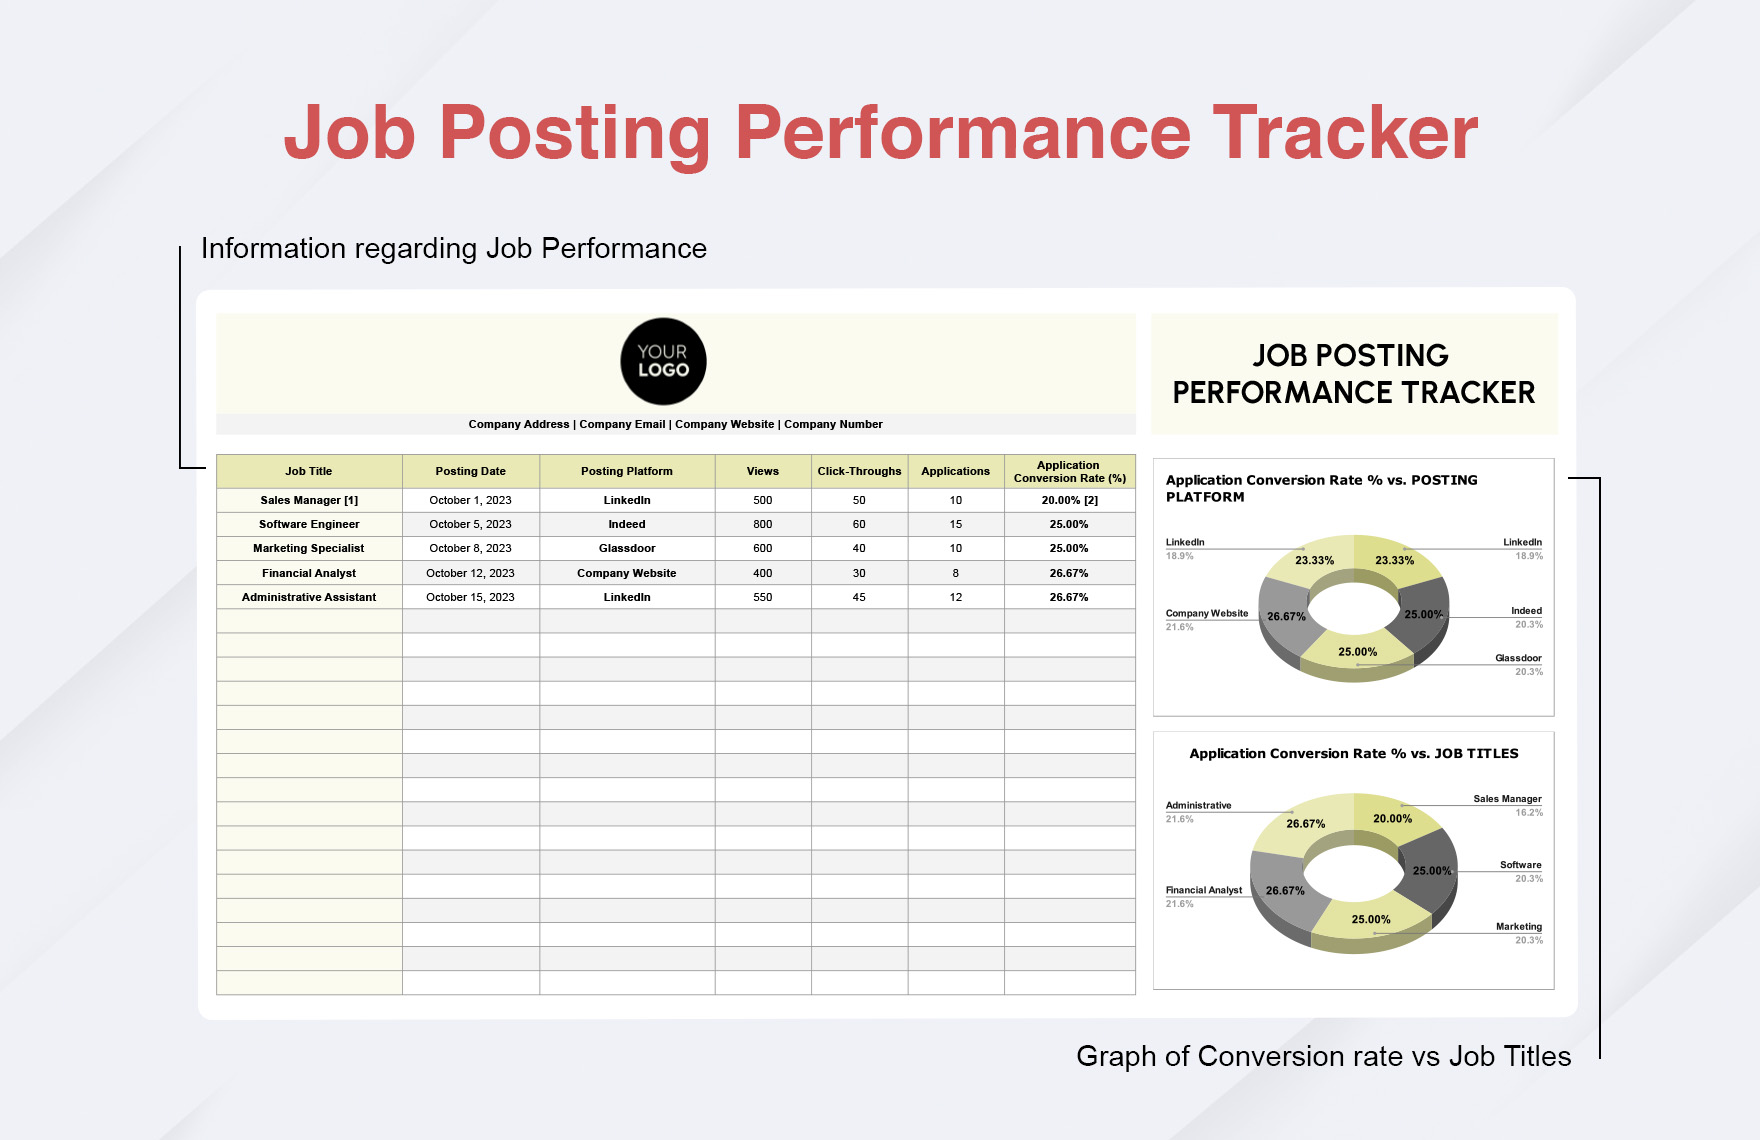 Job Posting Performance Tracker HR Template